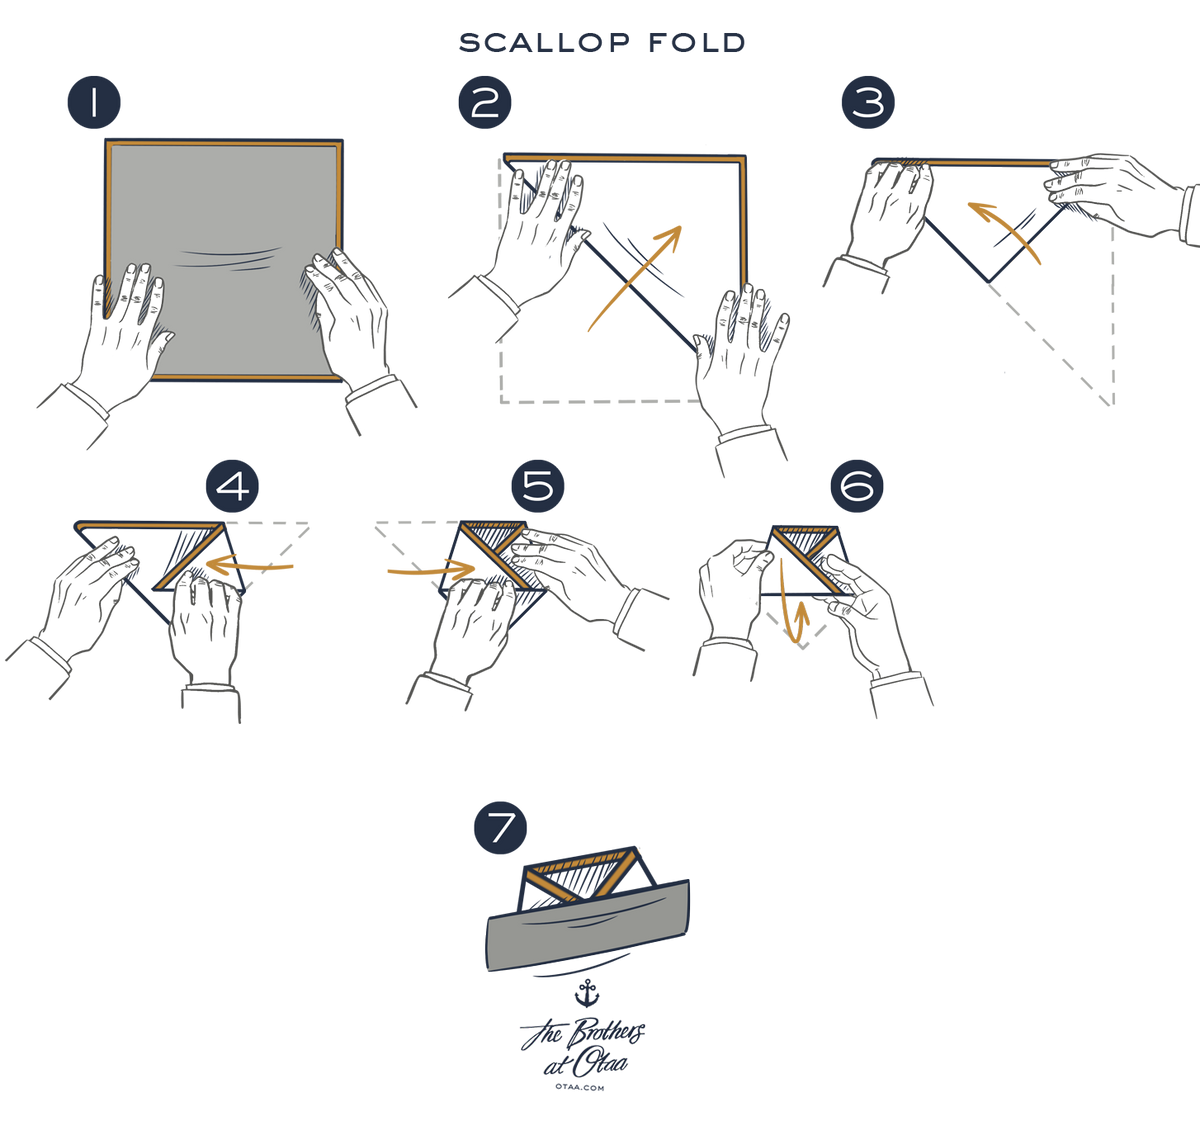 How To Fold A Scallop Fold - steps